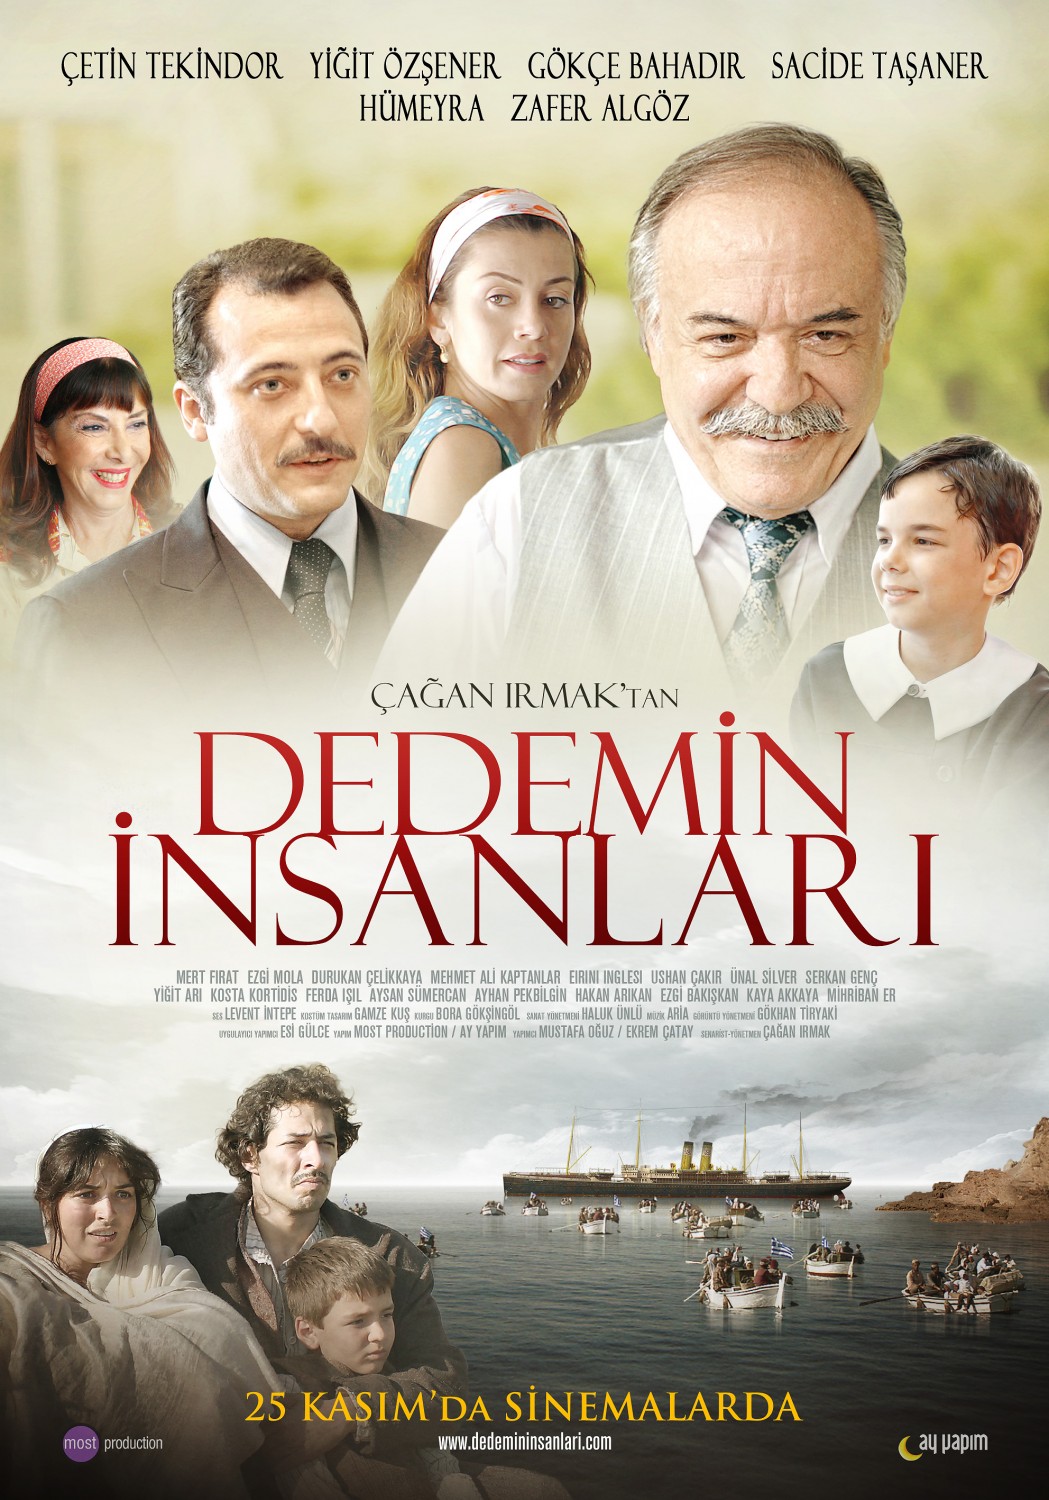 Extra Large Movie Poster Image for Dedemin Insanlari 